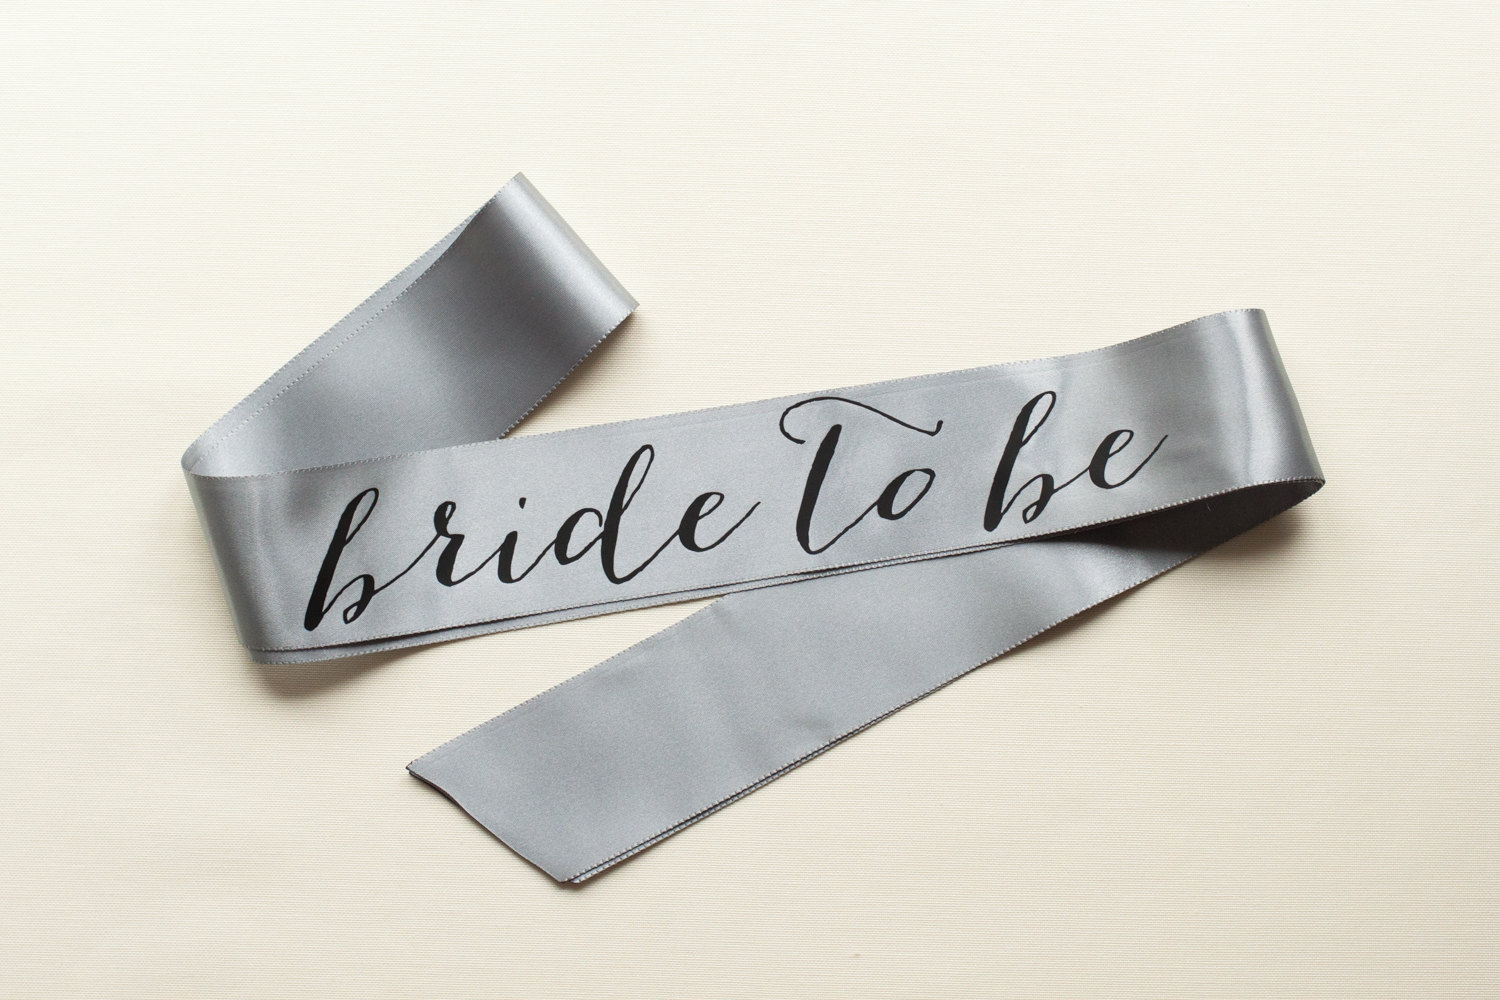 bride to be sash silver with black text | stylish bachelorette sash ideas | via https://emmalinebride.com/bride/bachelorette-sash-ideas/